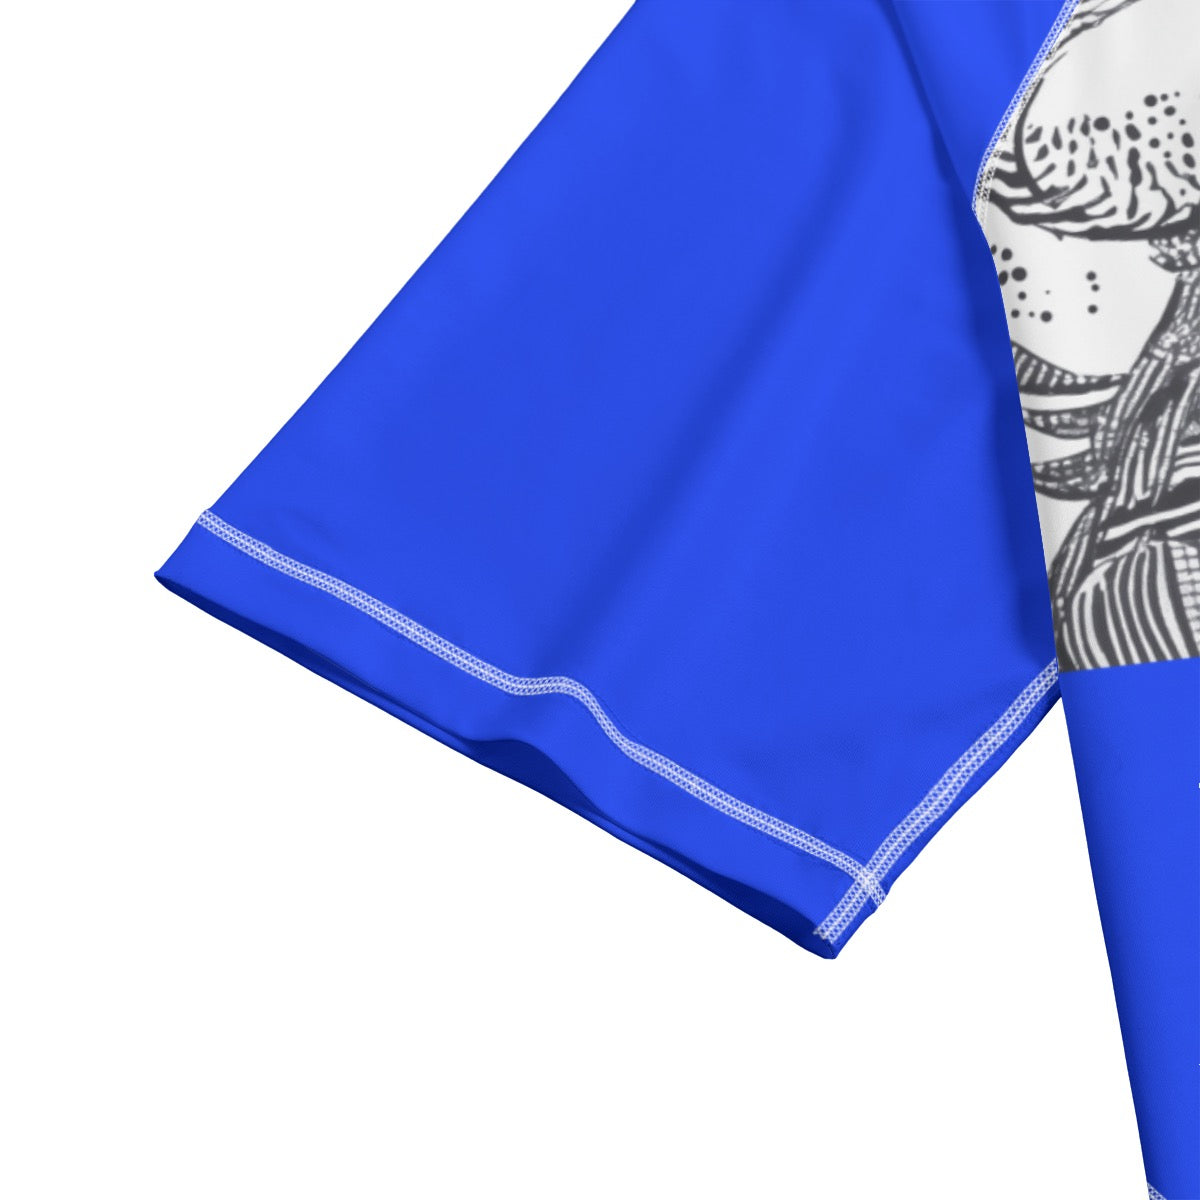 Windy Gate -- Unisex Yoga Sports Short Sleeve T-Shirt